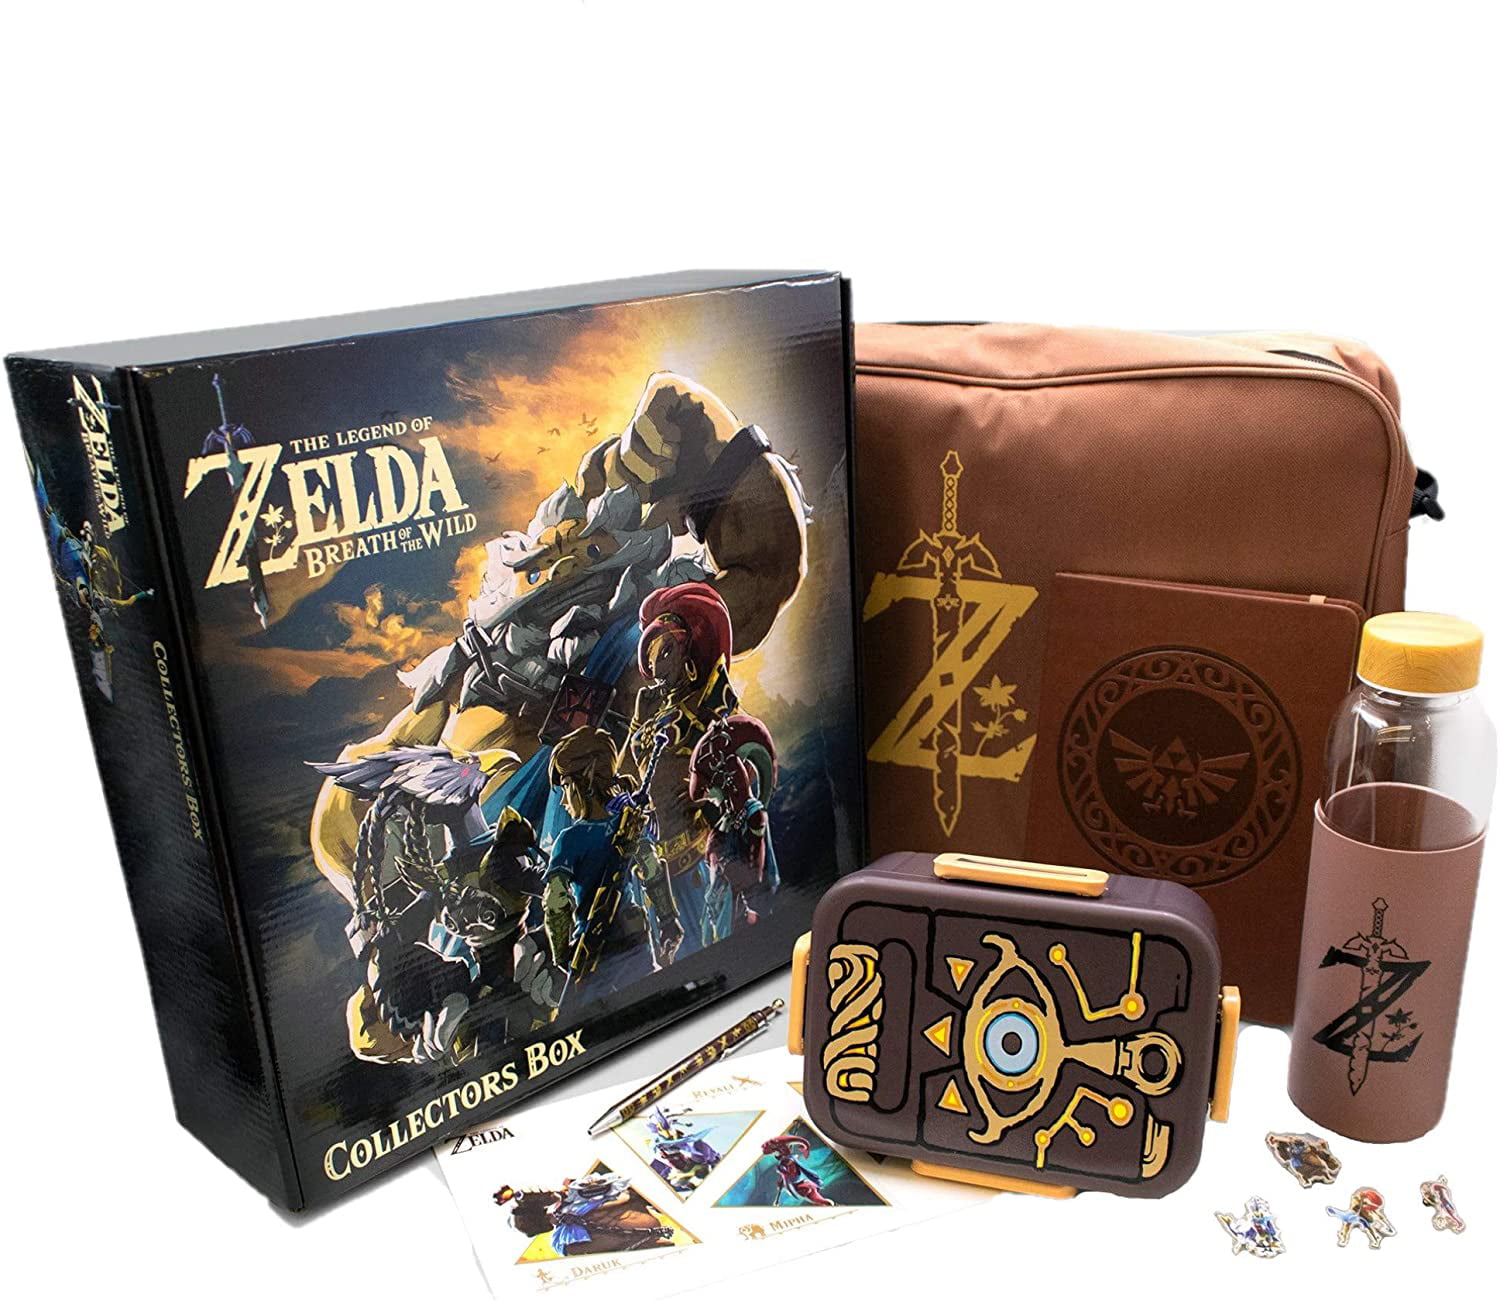 The Legend Of Zelda Breath Of The Wild Collectors Box Includes 7